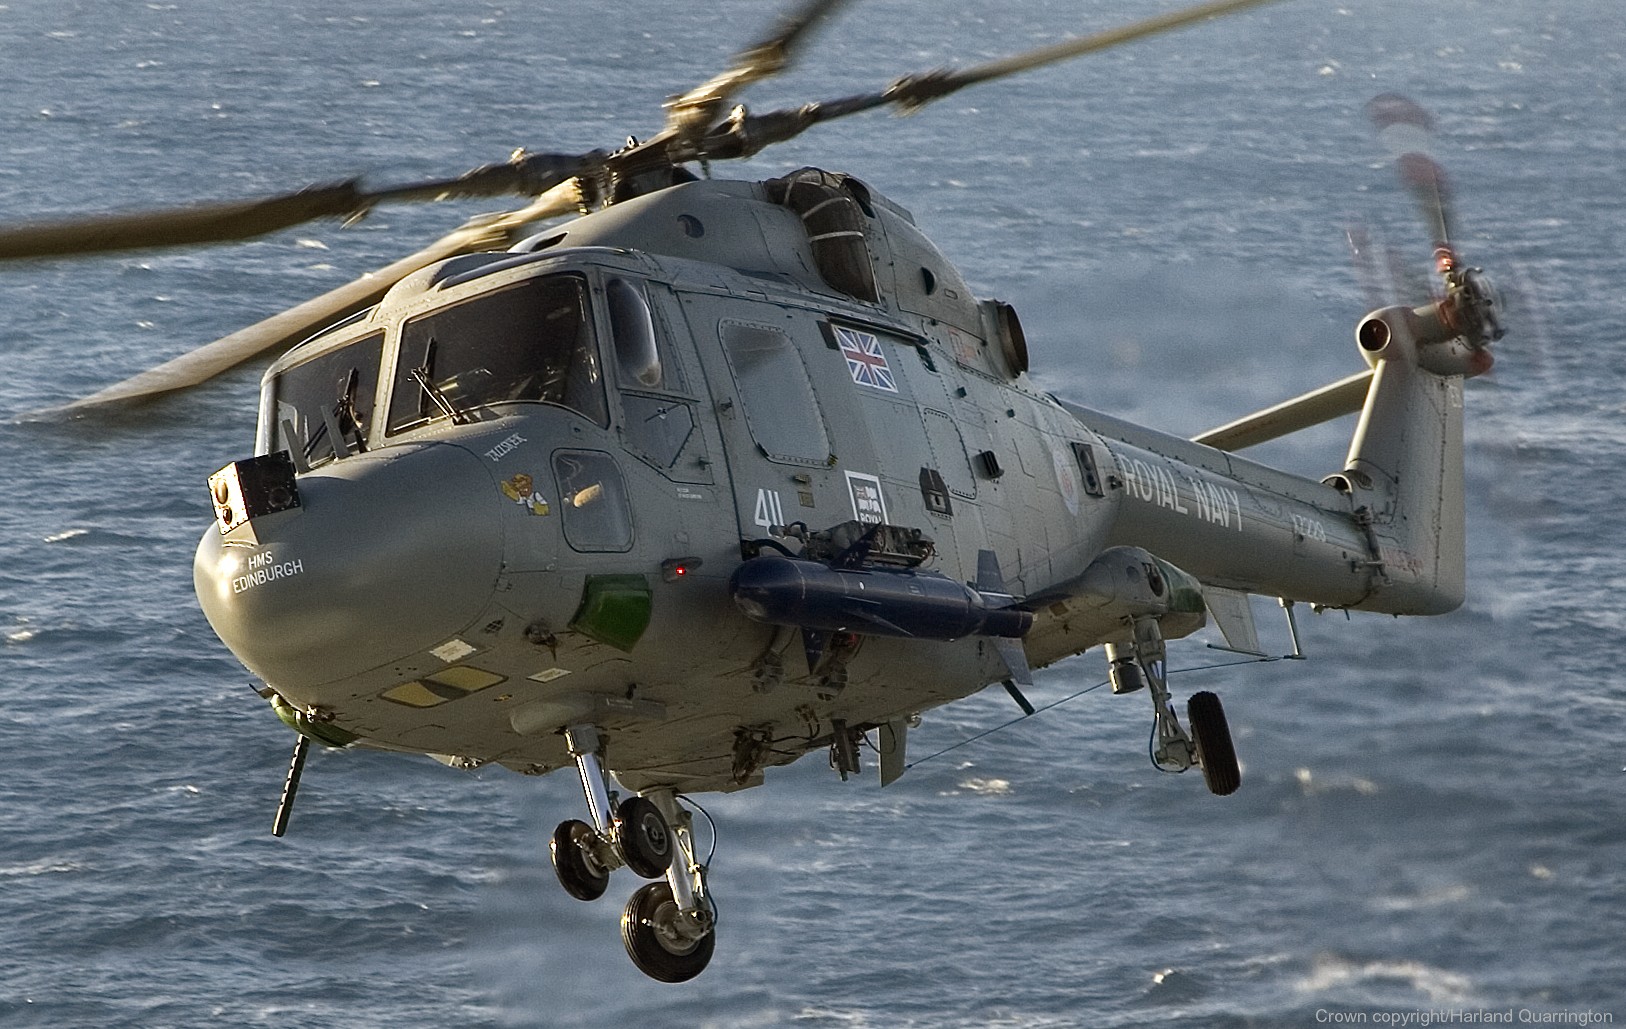 sea skua anti-ship missile agm asm bae mbda royal navy lynx helicopter 06